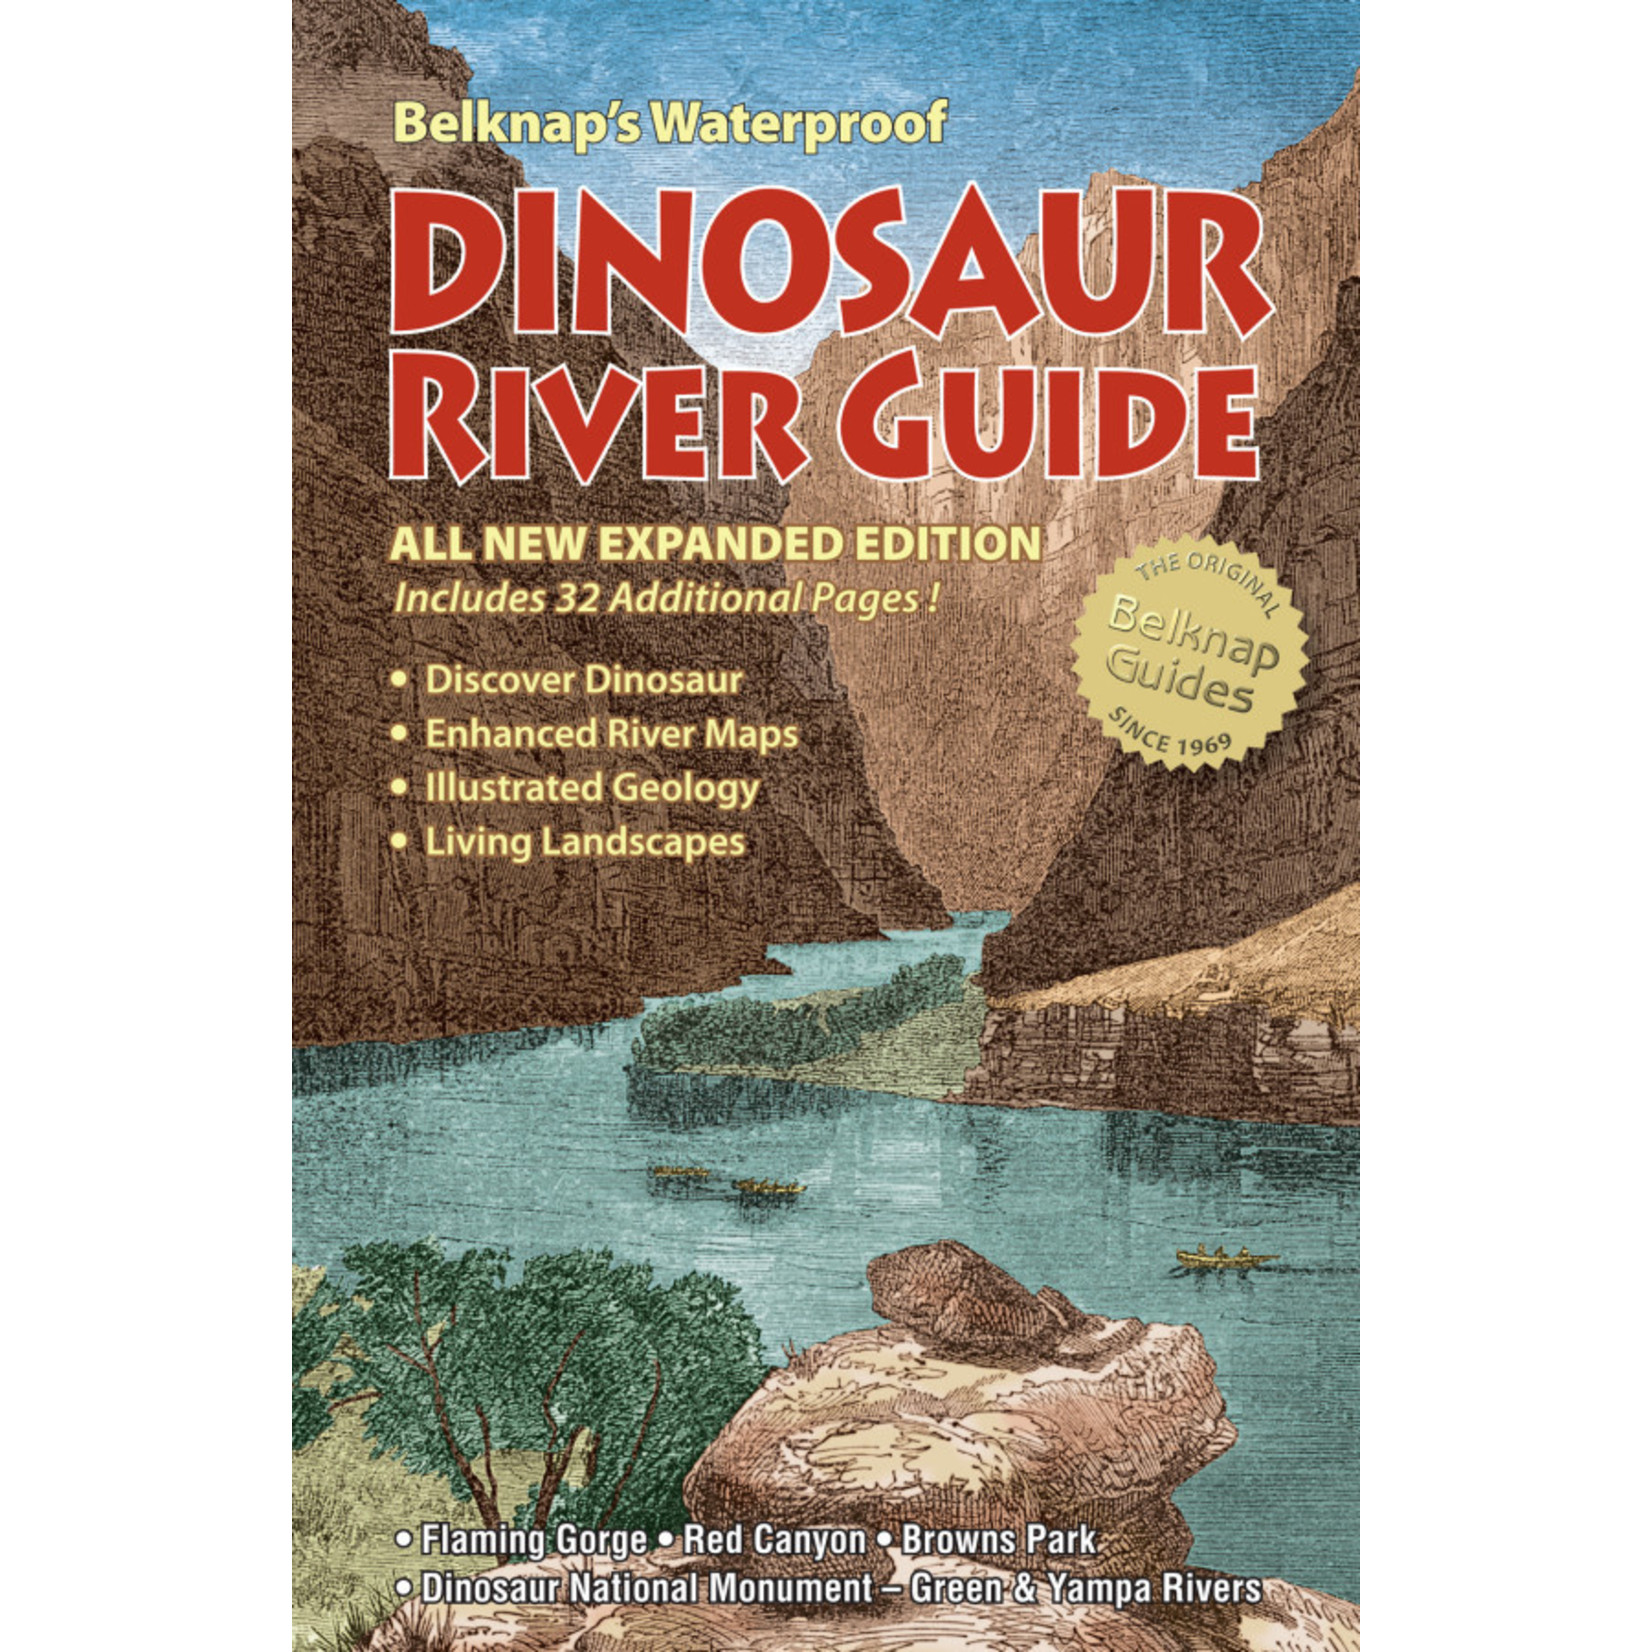 Belknap's Belknap's Waterproof Dinosaur River Guide